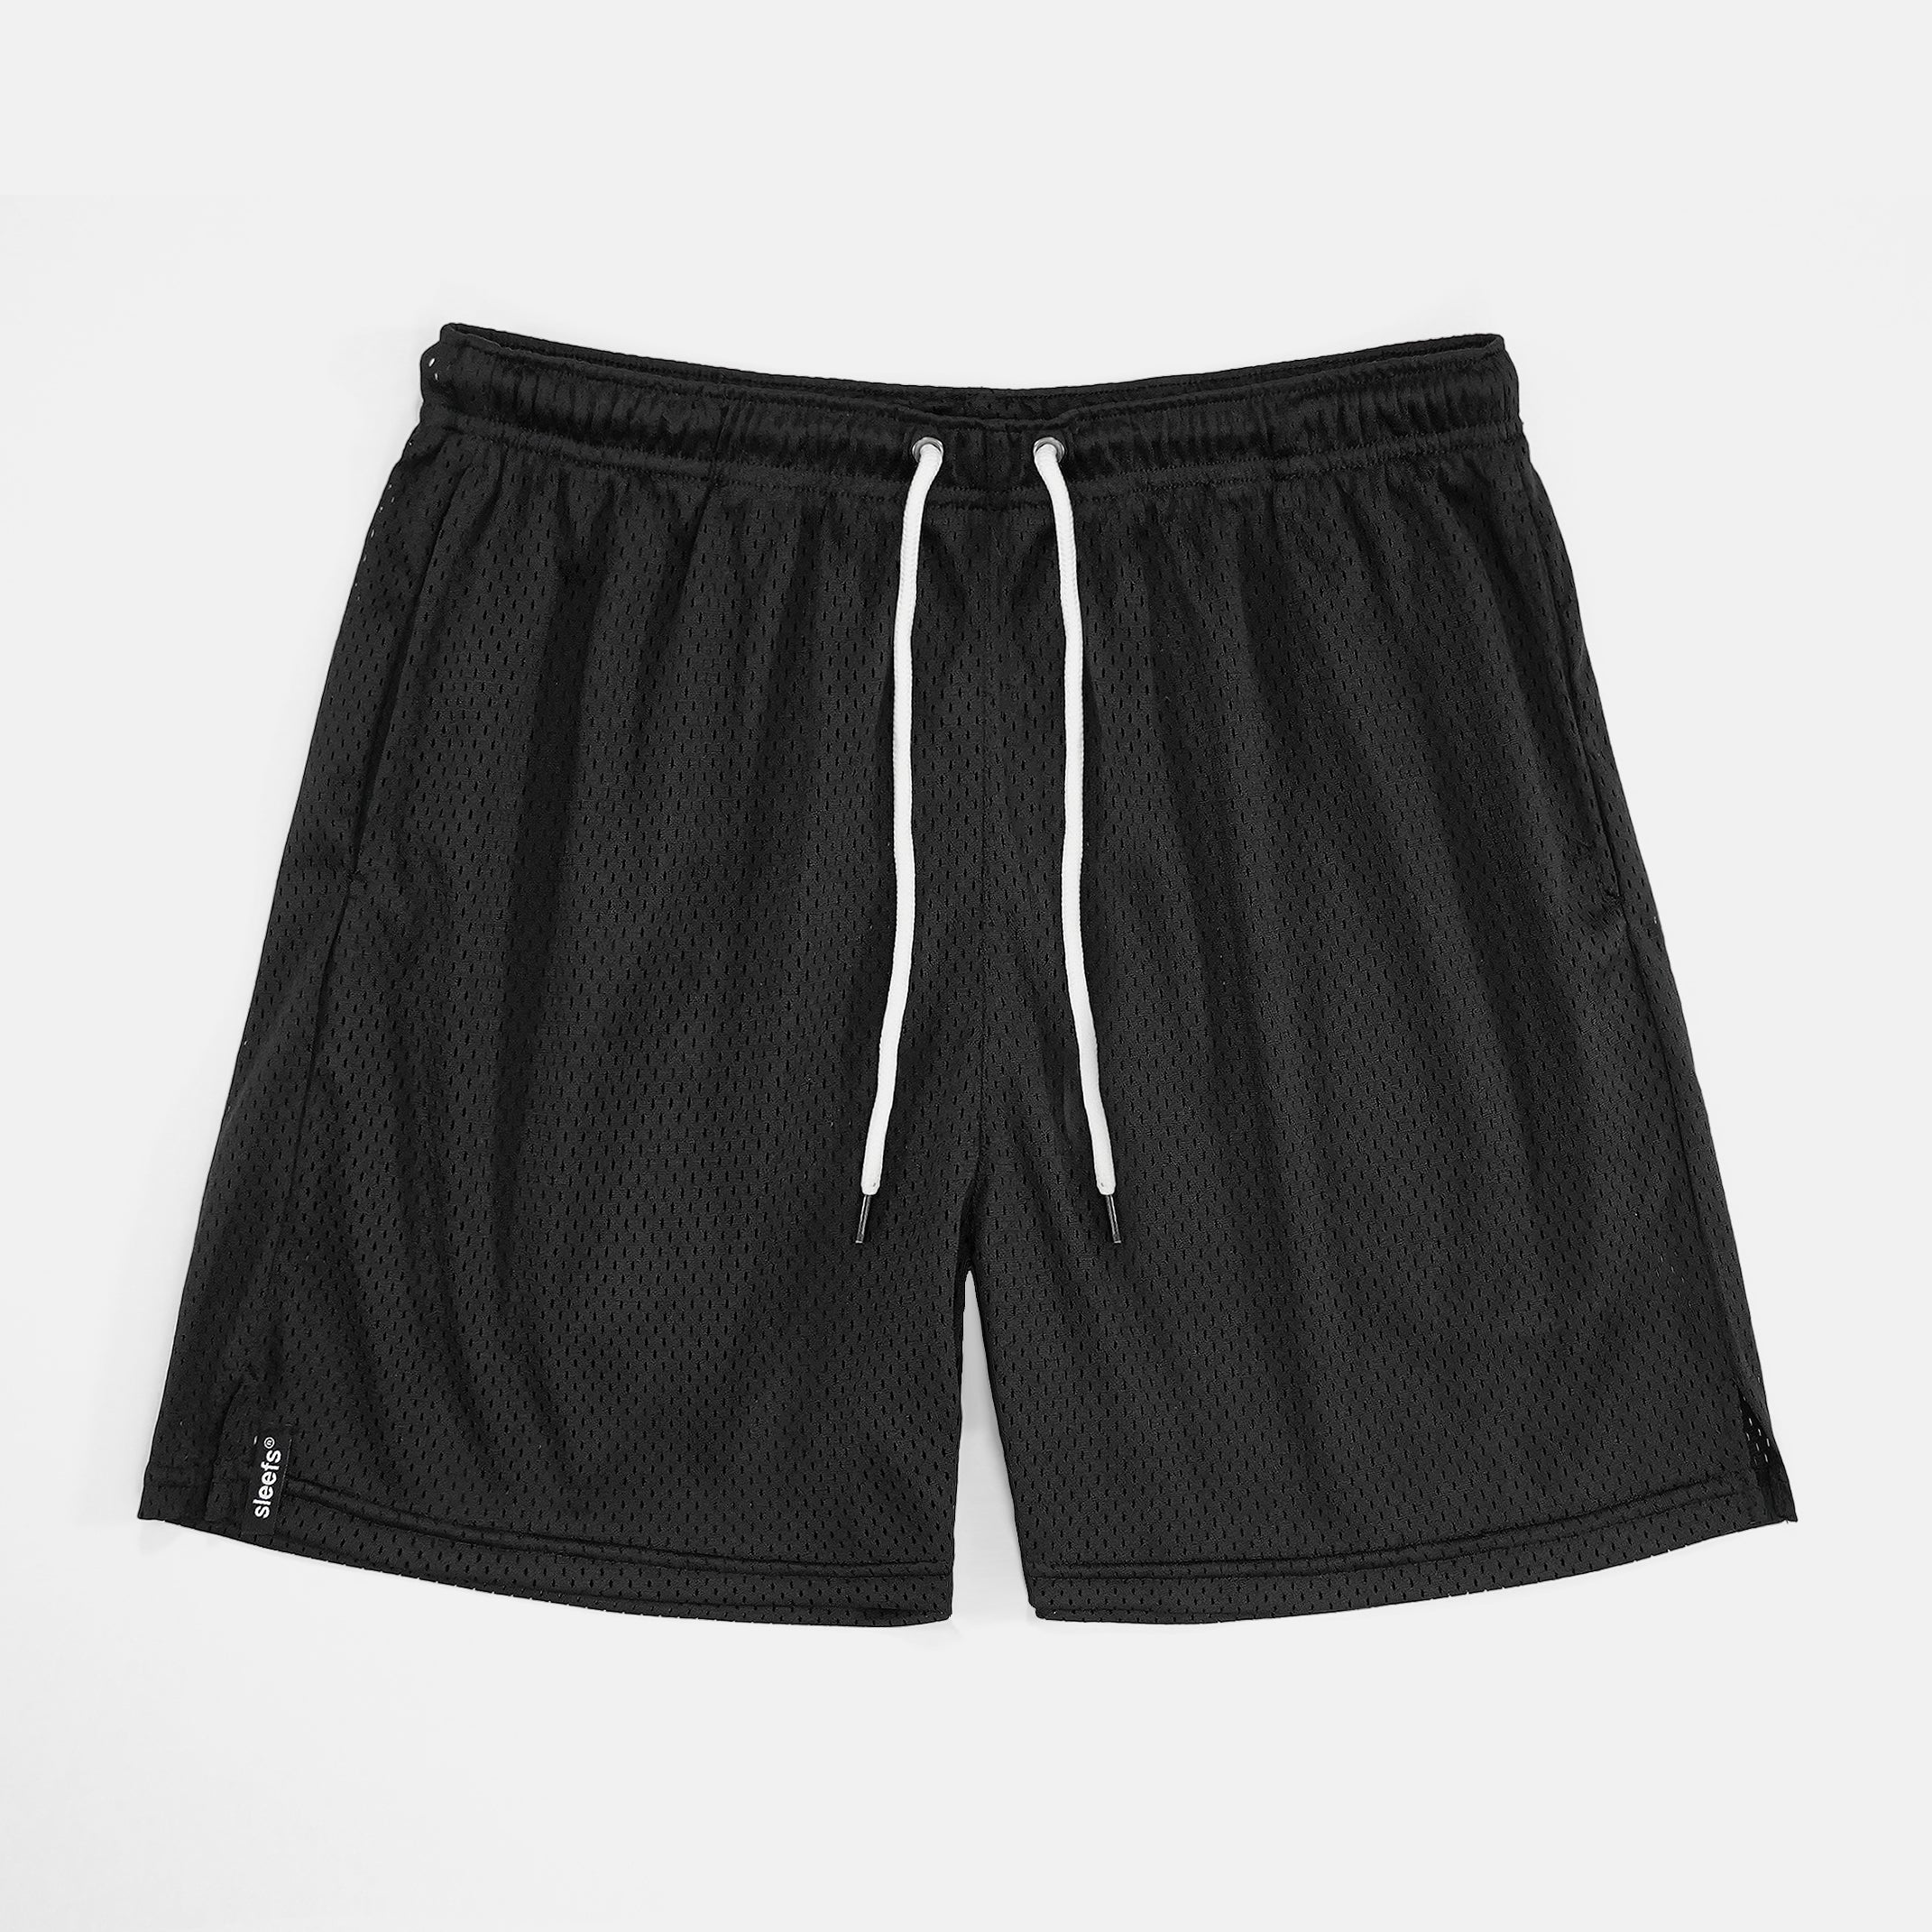 Basic Black Shorts - 7